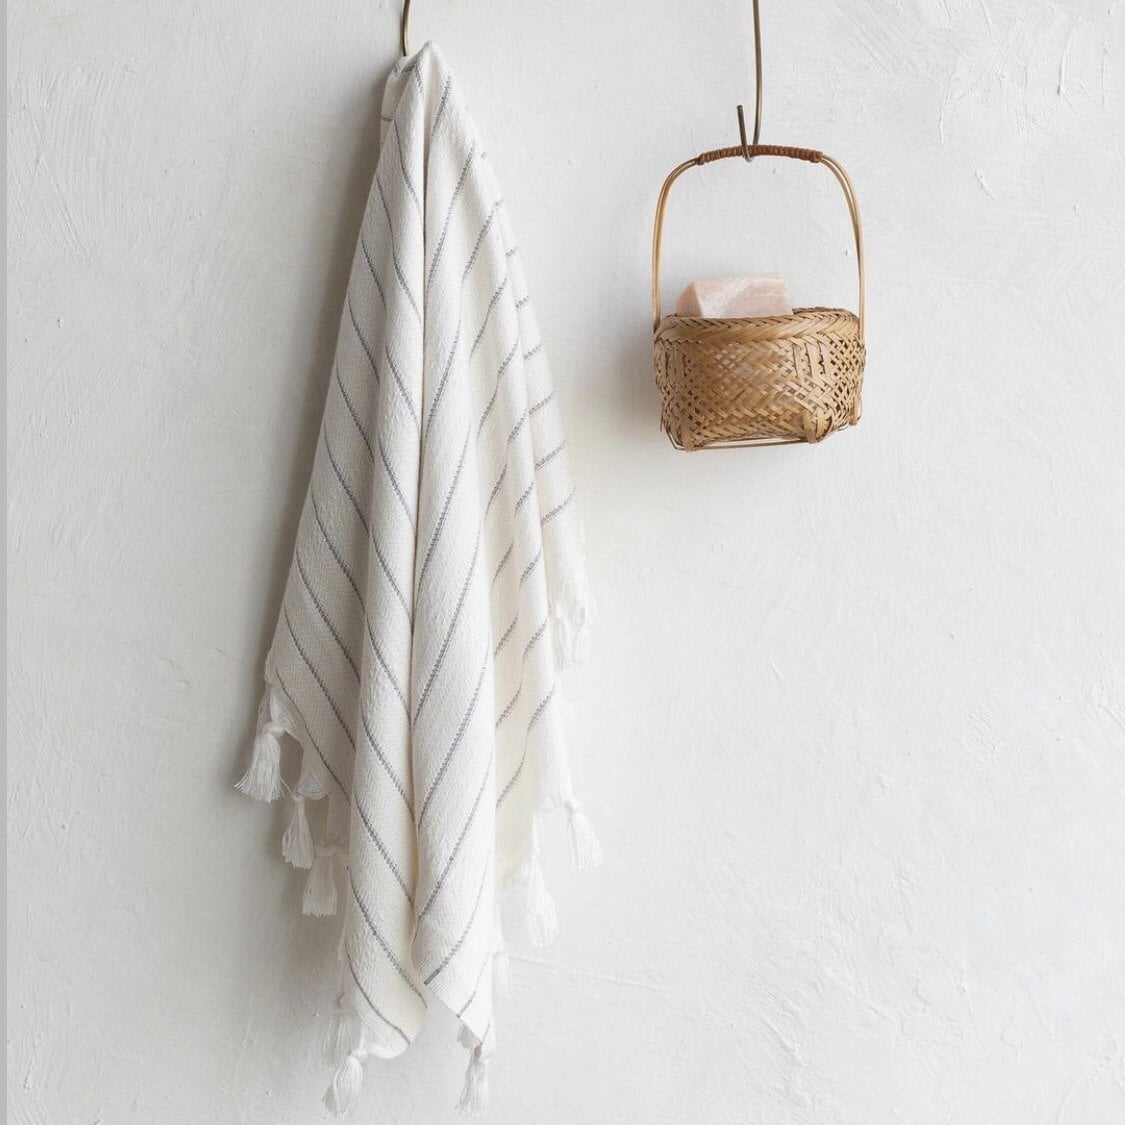 Deniz 100% Bamboo-Cotton Turkish Hand and Kitchen Towel